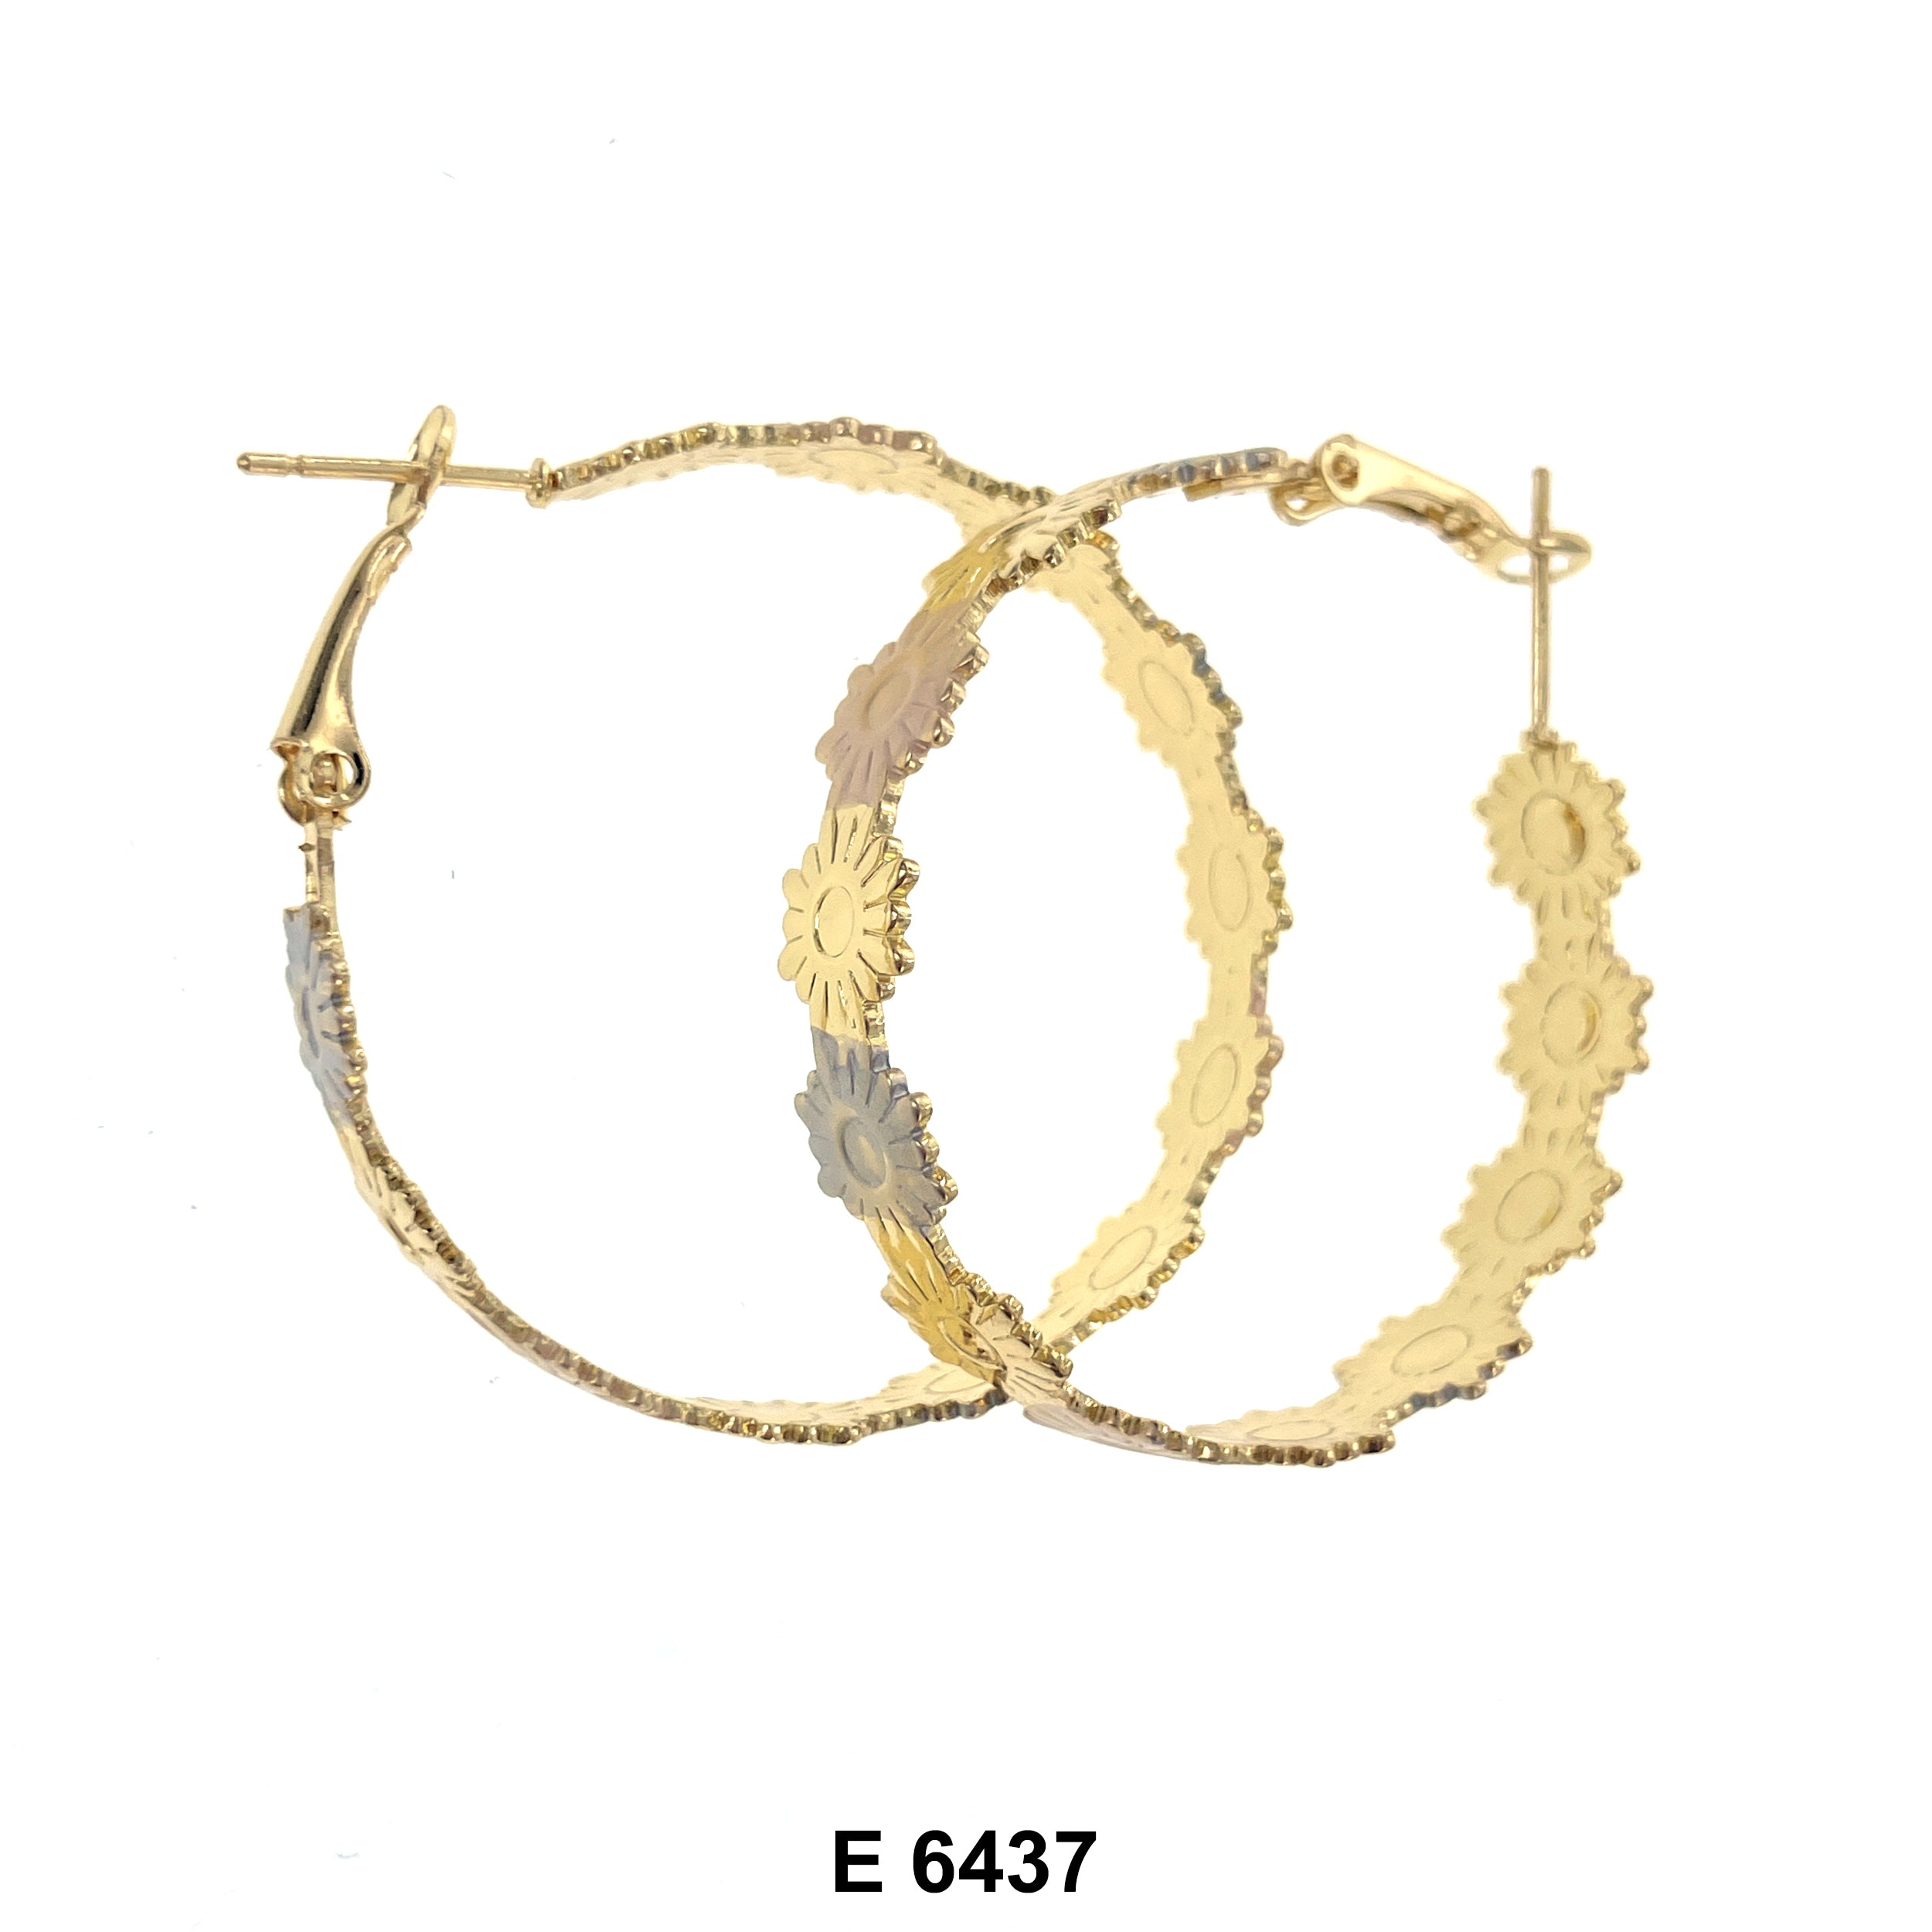 Engraved Hoop Earrings E 6437